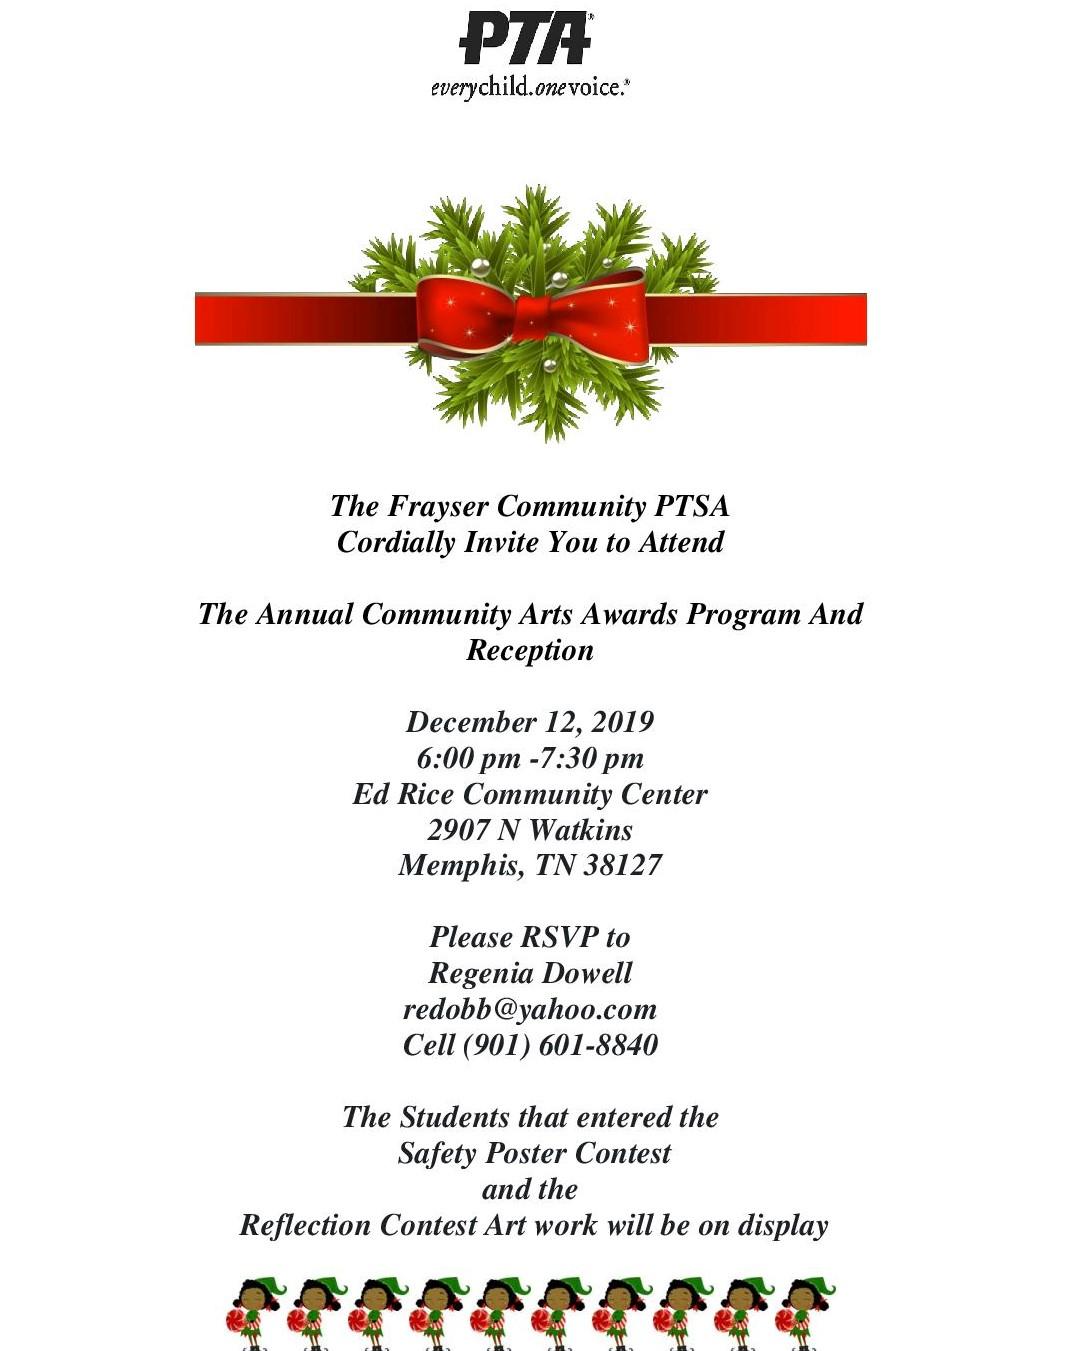 Frayser Community PTSA presents The Annual Community Arts Awards Program and Reception 